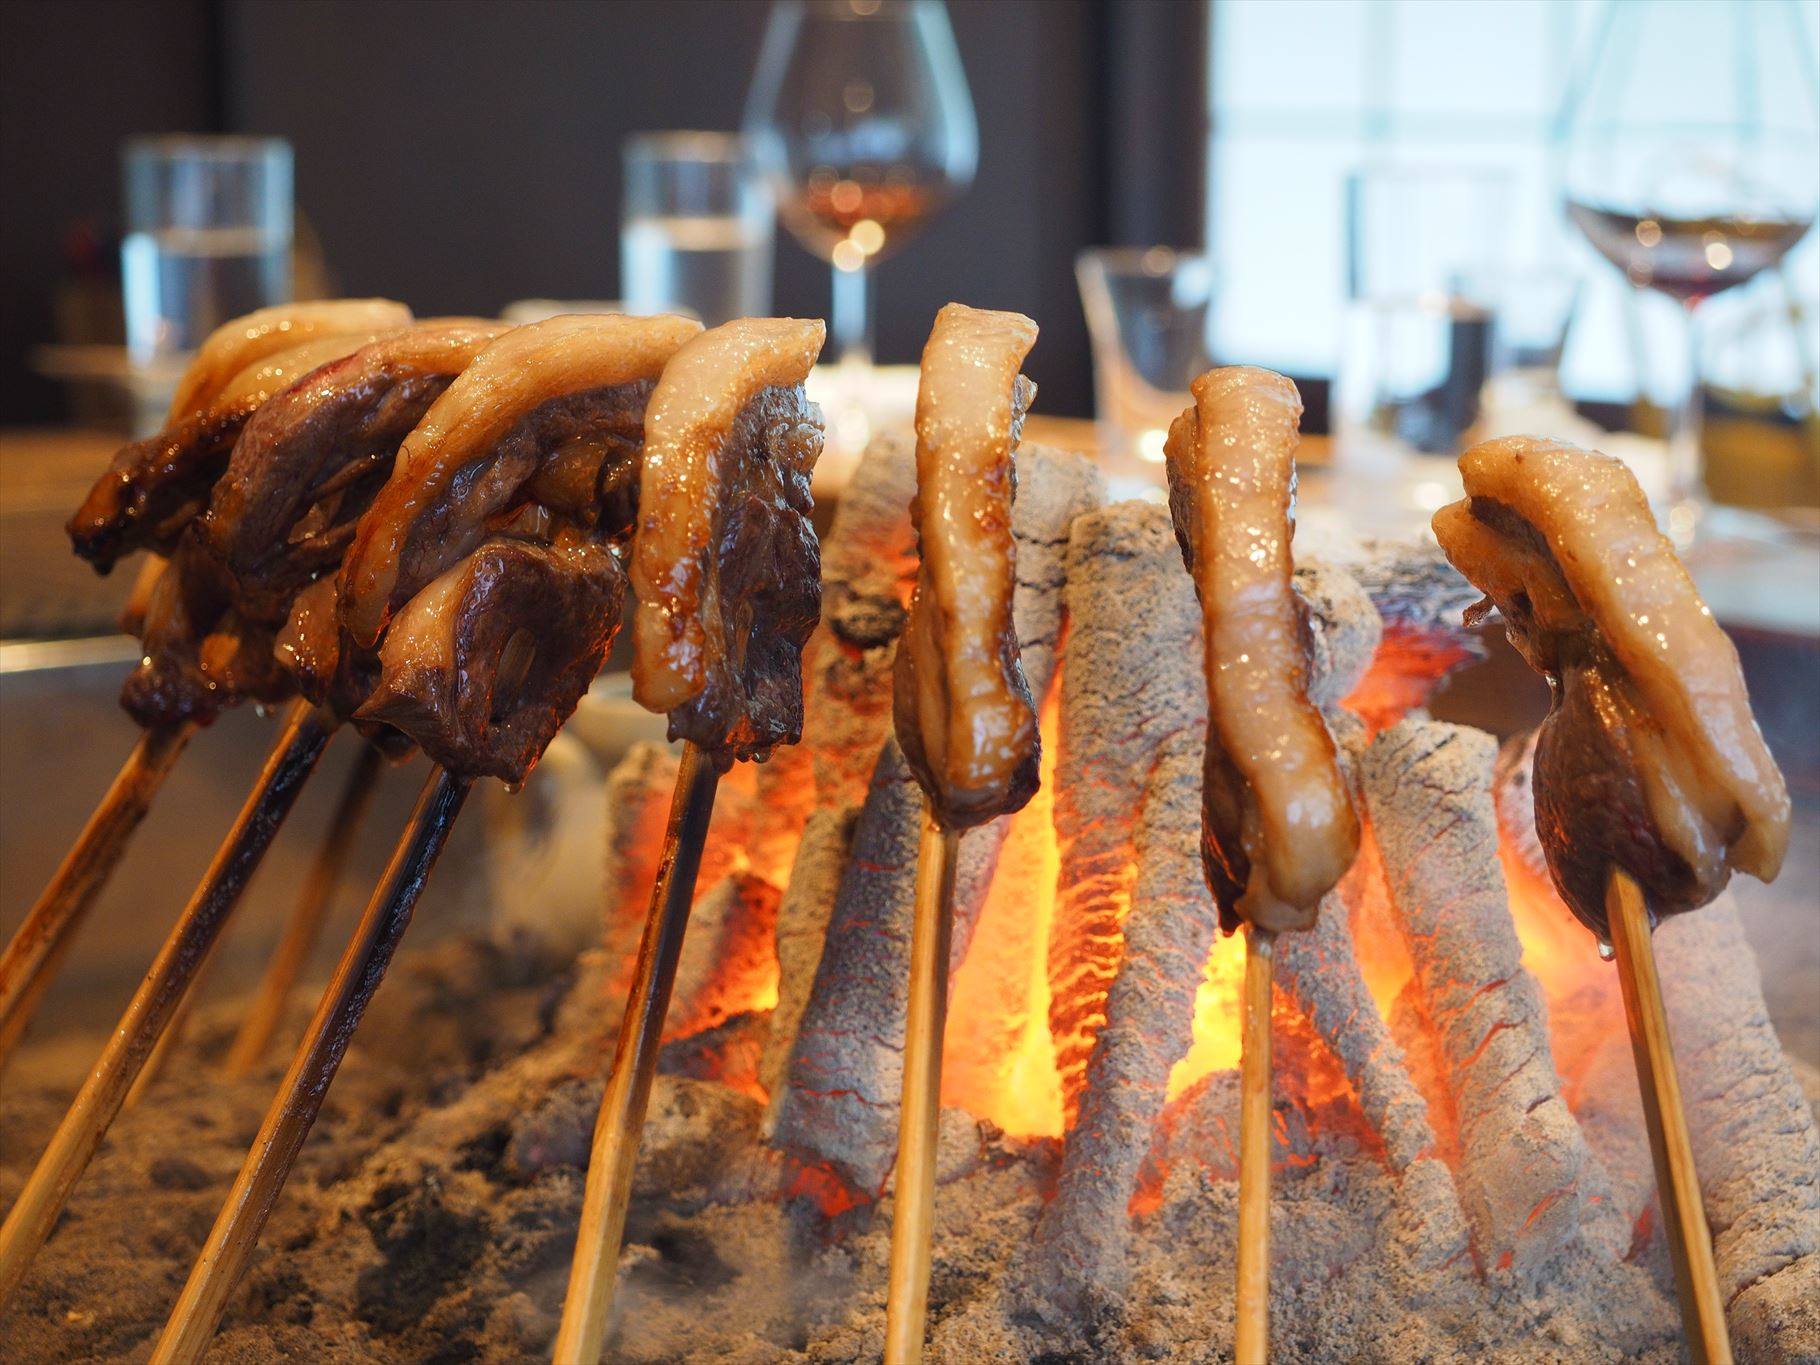 The Art of the “Tuhog-tuhog” the Barbecue